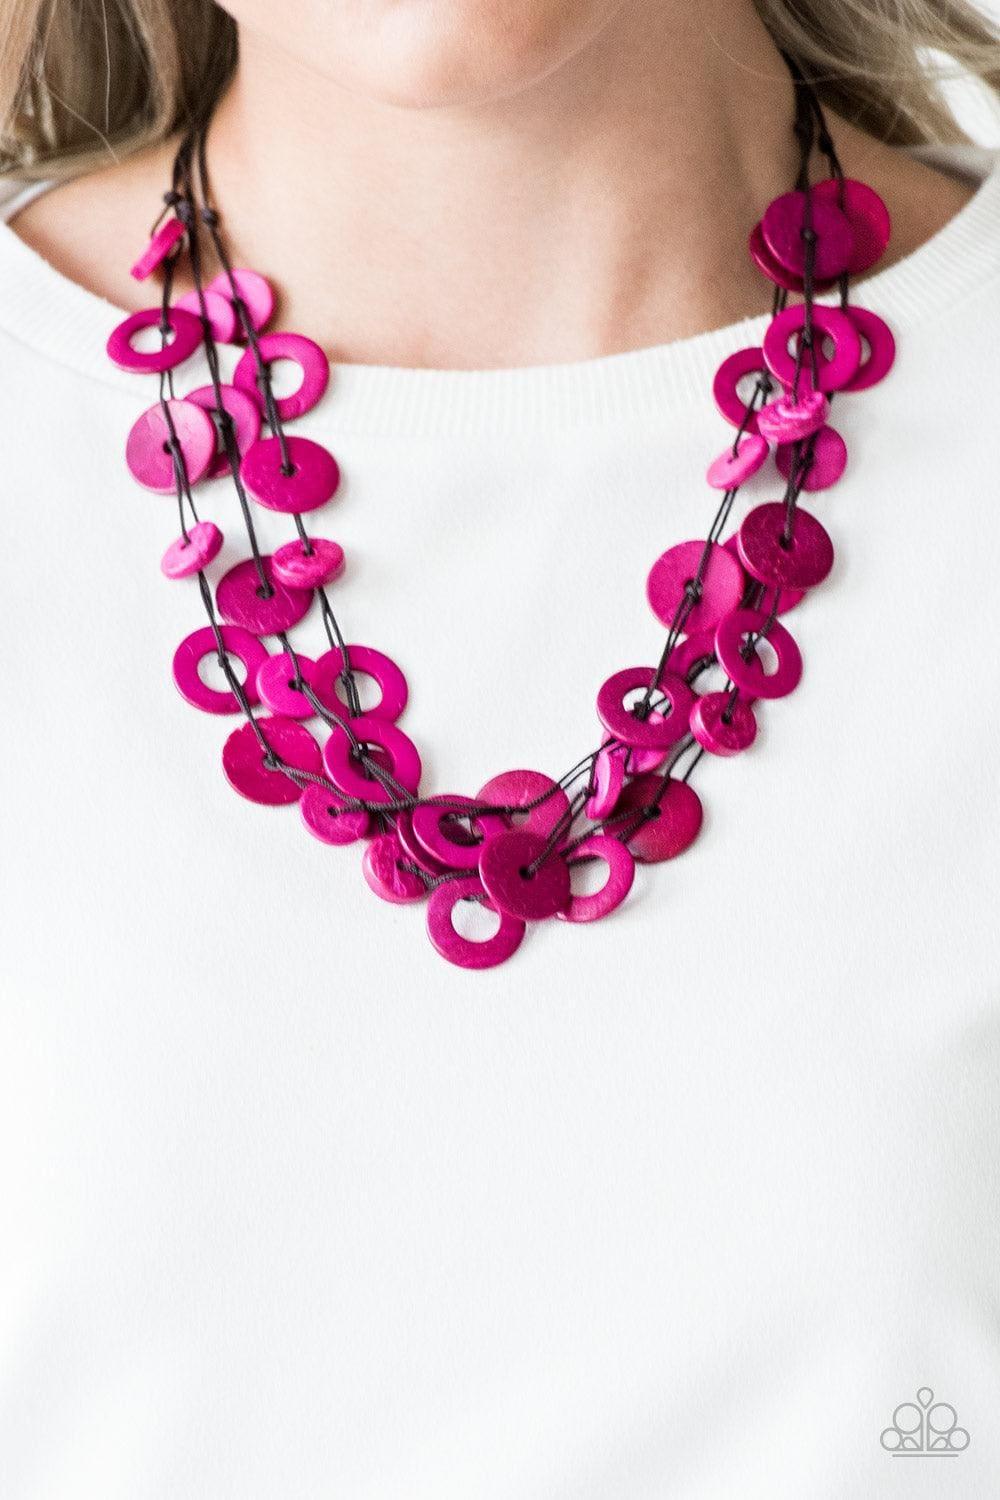 Paparazzi Accessories - Wonderfully Walla Walla - Pink Necklace - Bling by JessieK